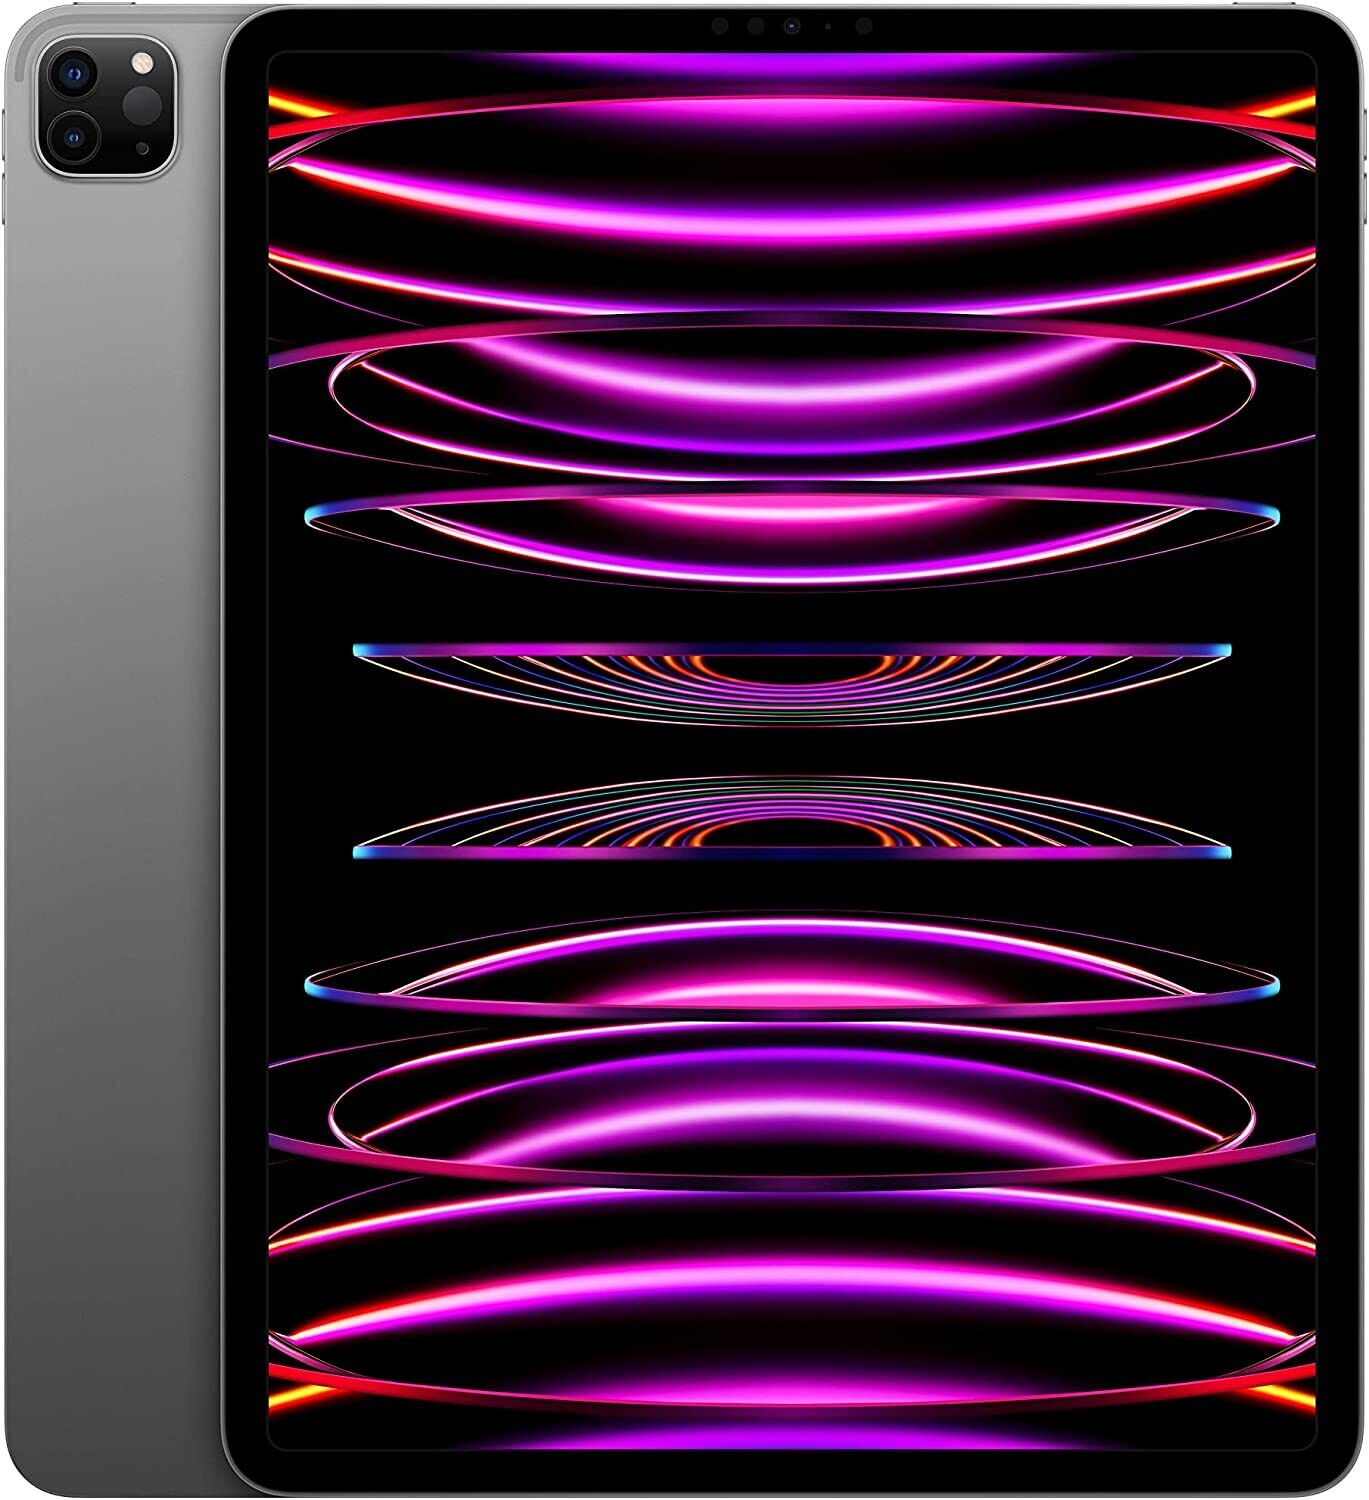 2022 Apple 11-inch iPad Pro (Wi-Fi, 128GB) - Space Gray (4th Generation)